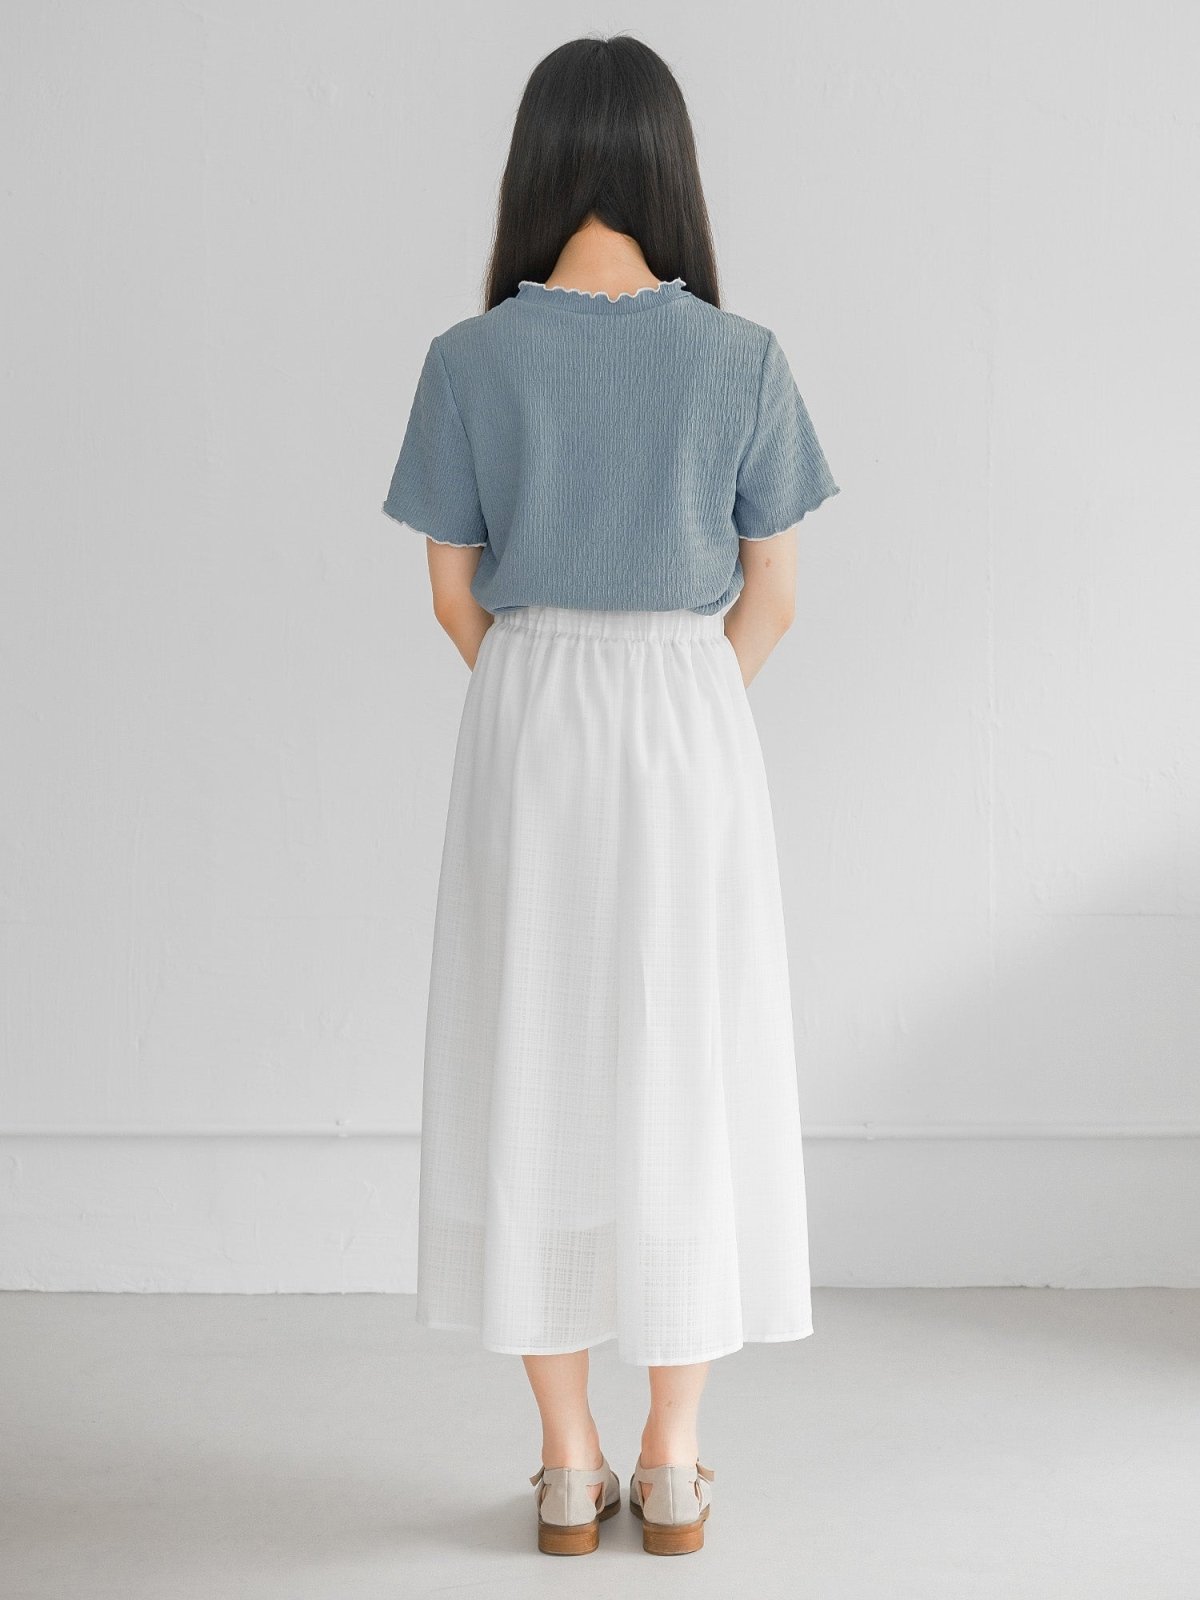 Chloe Checker Patterned Skirt - DAG-DD0191-23IvoryPlaidF - White - F - D'ZAGE Designs